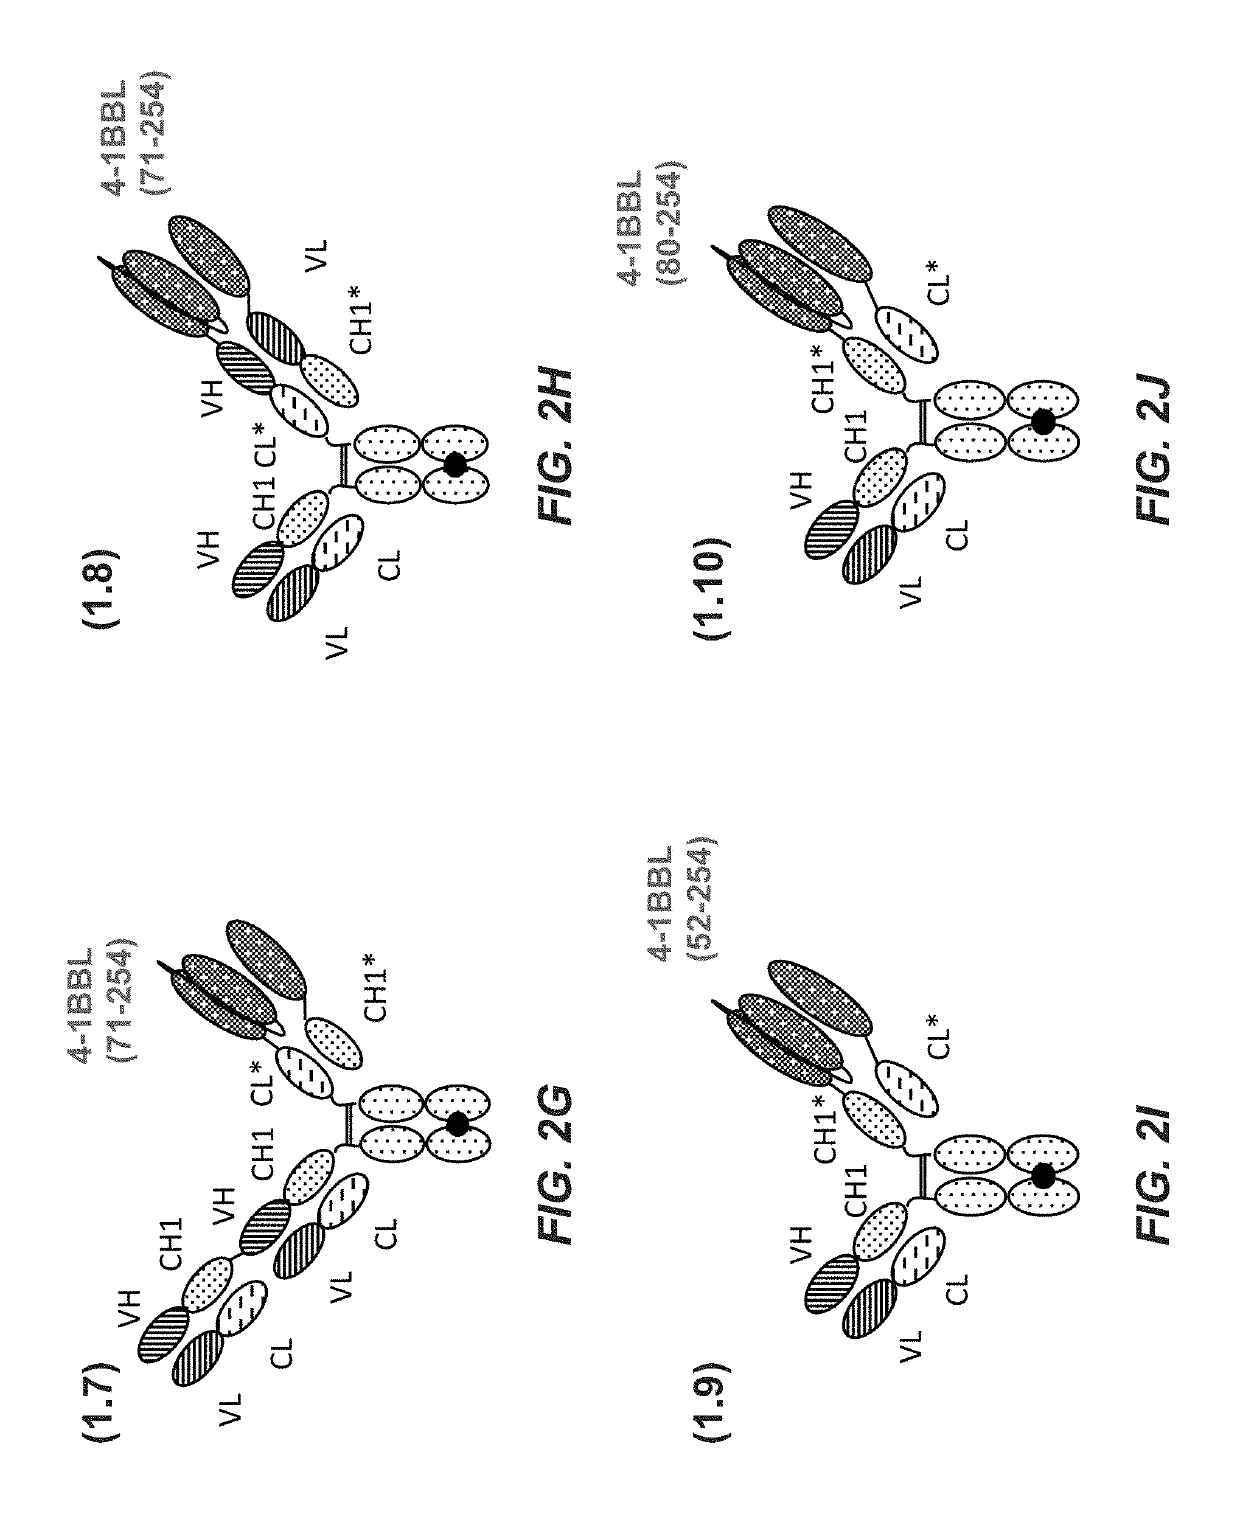 Tumor necrosis factor (TNF) family ligand trimer-containing antigen-binding molecules